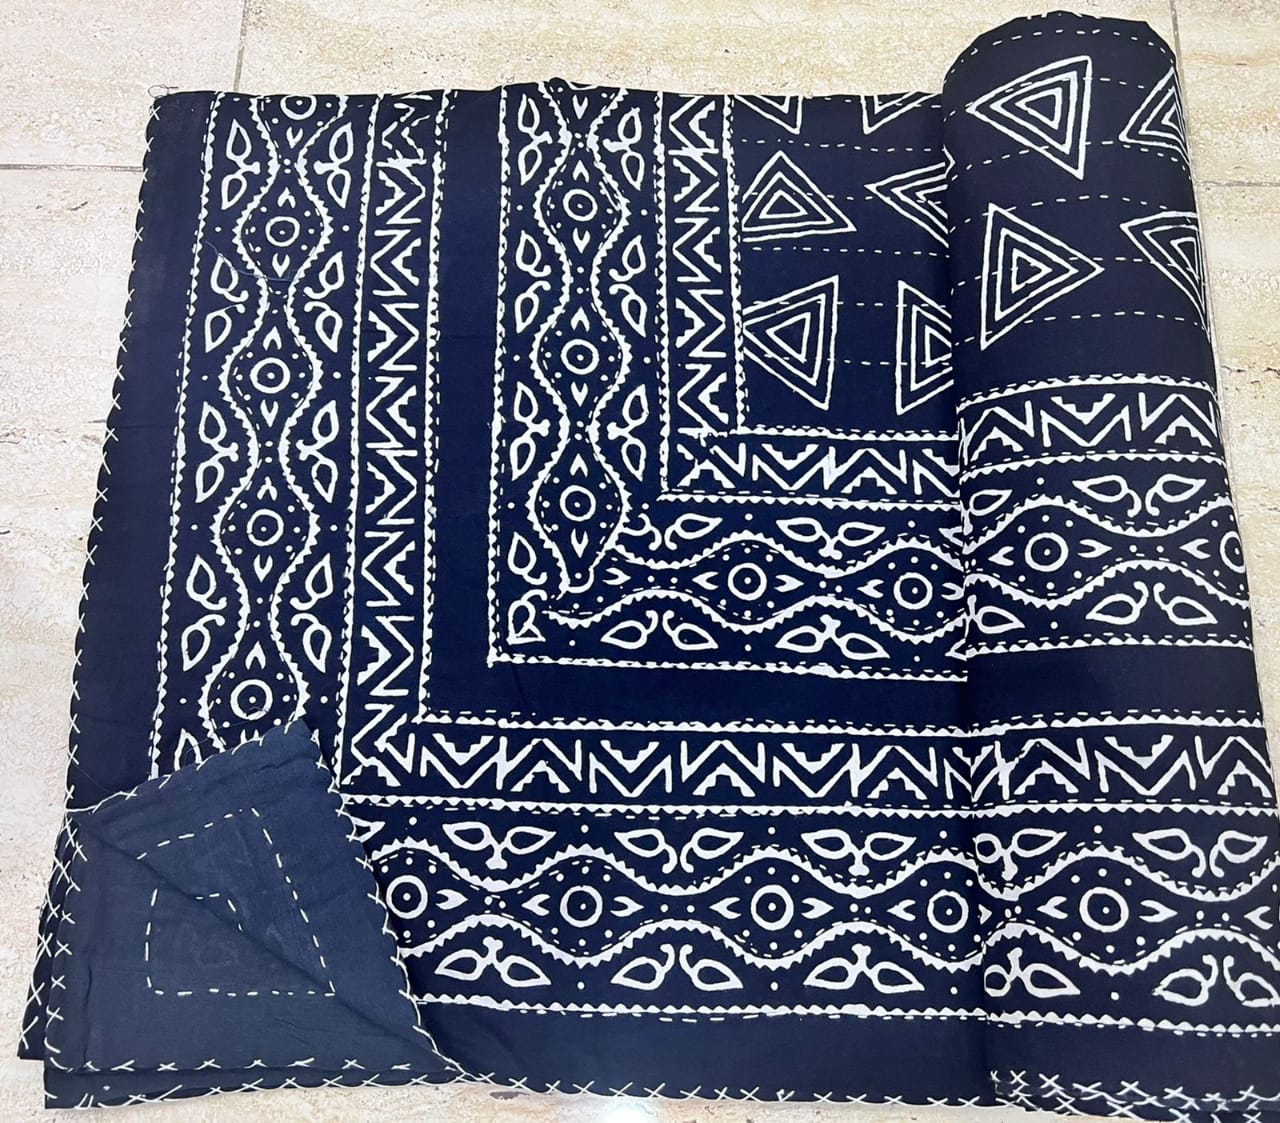 Traditional Kantha stitched Gudari